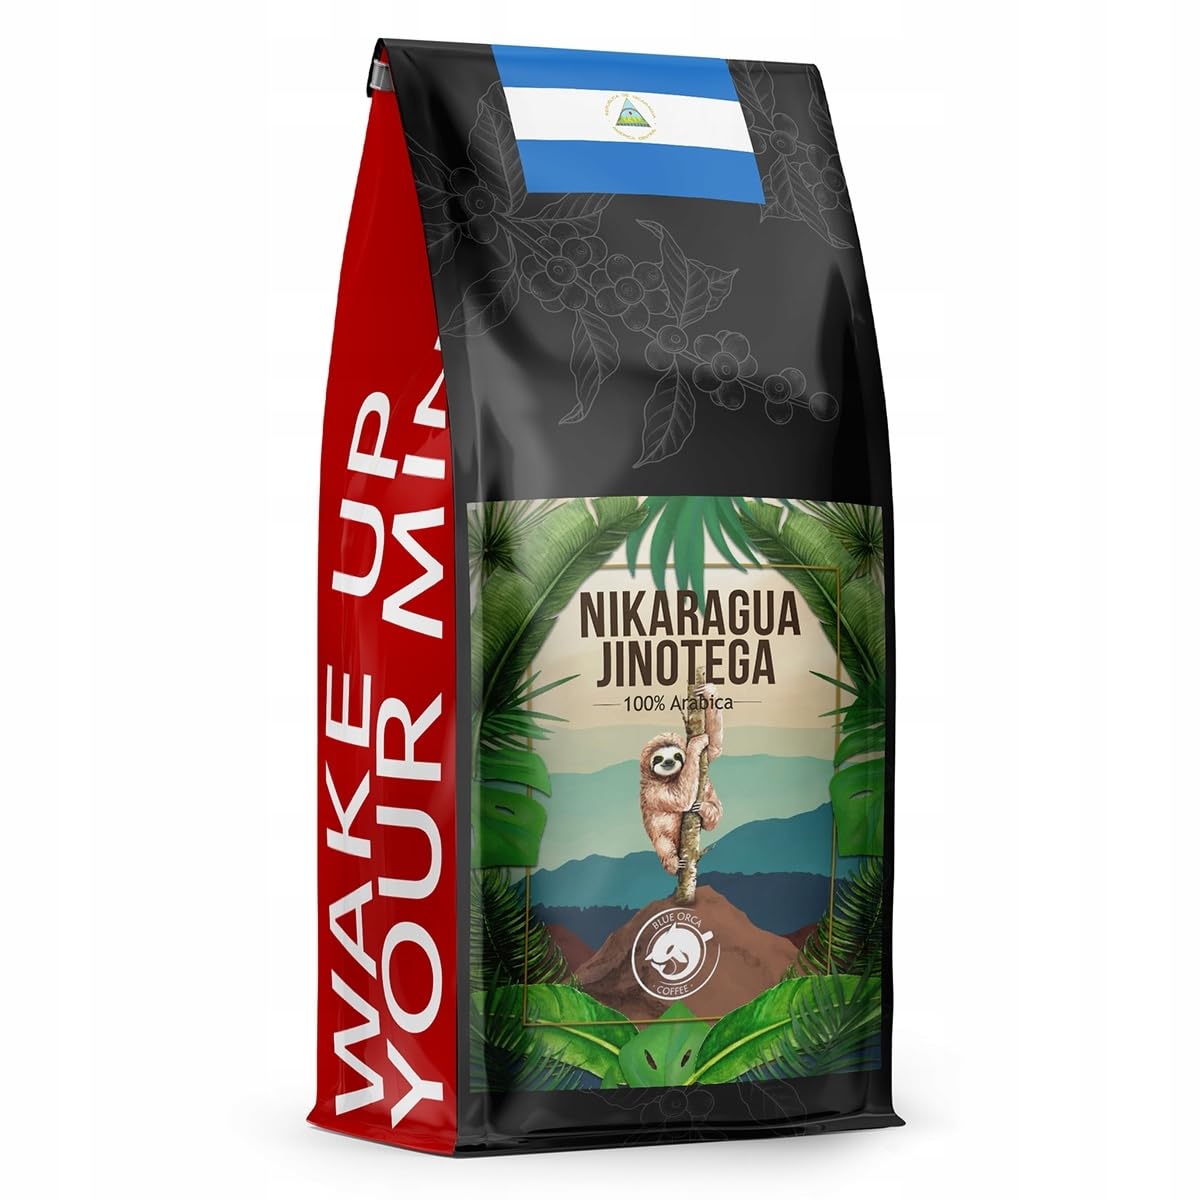 Blue Orca Coffee - NIKARAGUA JINOTEGA - Specialty Kaffeebohnen aus Nicaragua Jinotega - Frisch geröstet - Single Origin - SCA 83 Punkte, 1 kg
